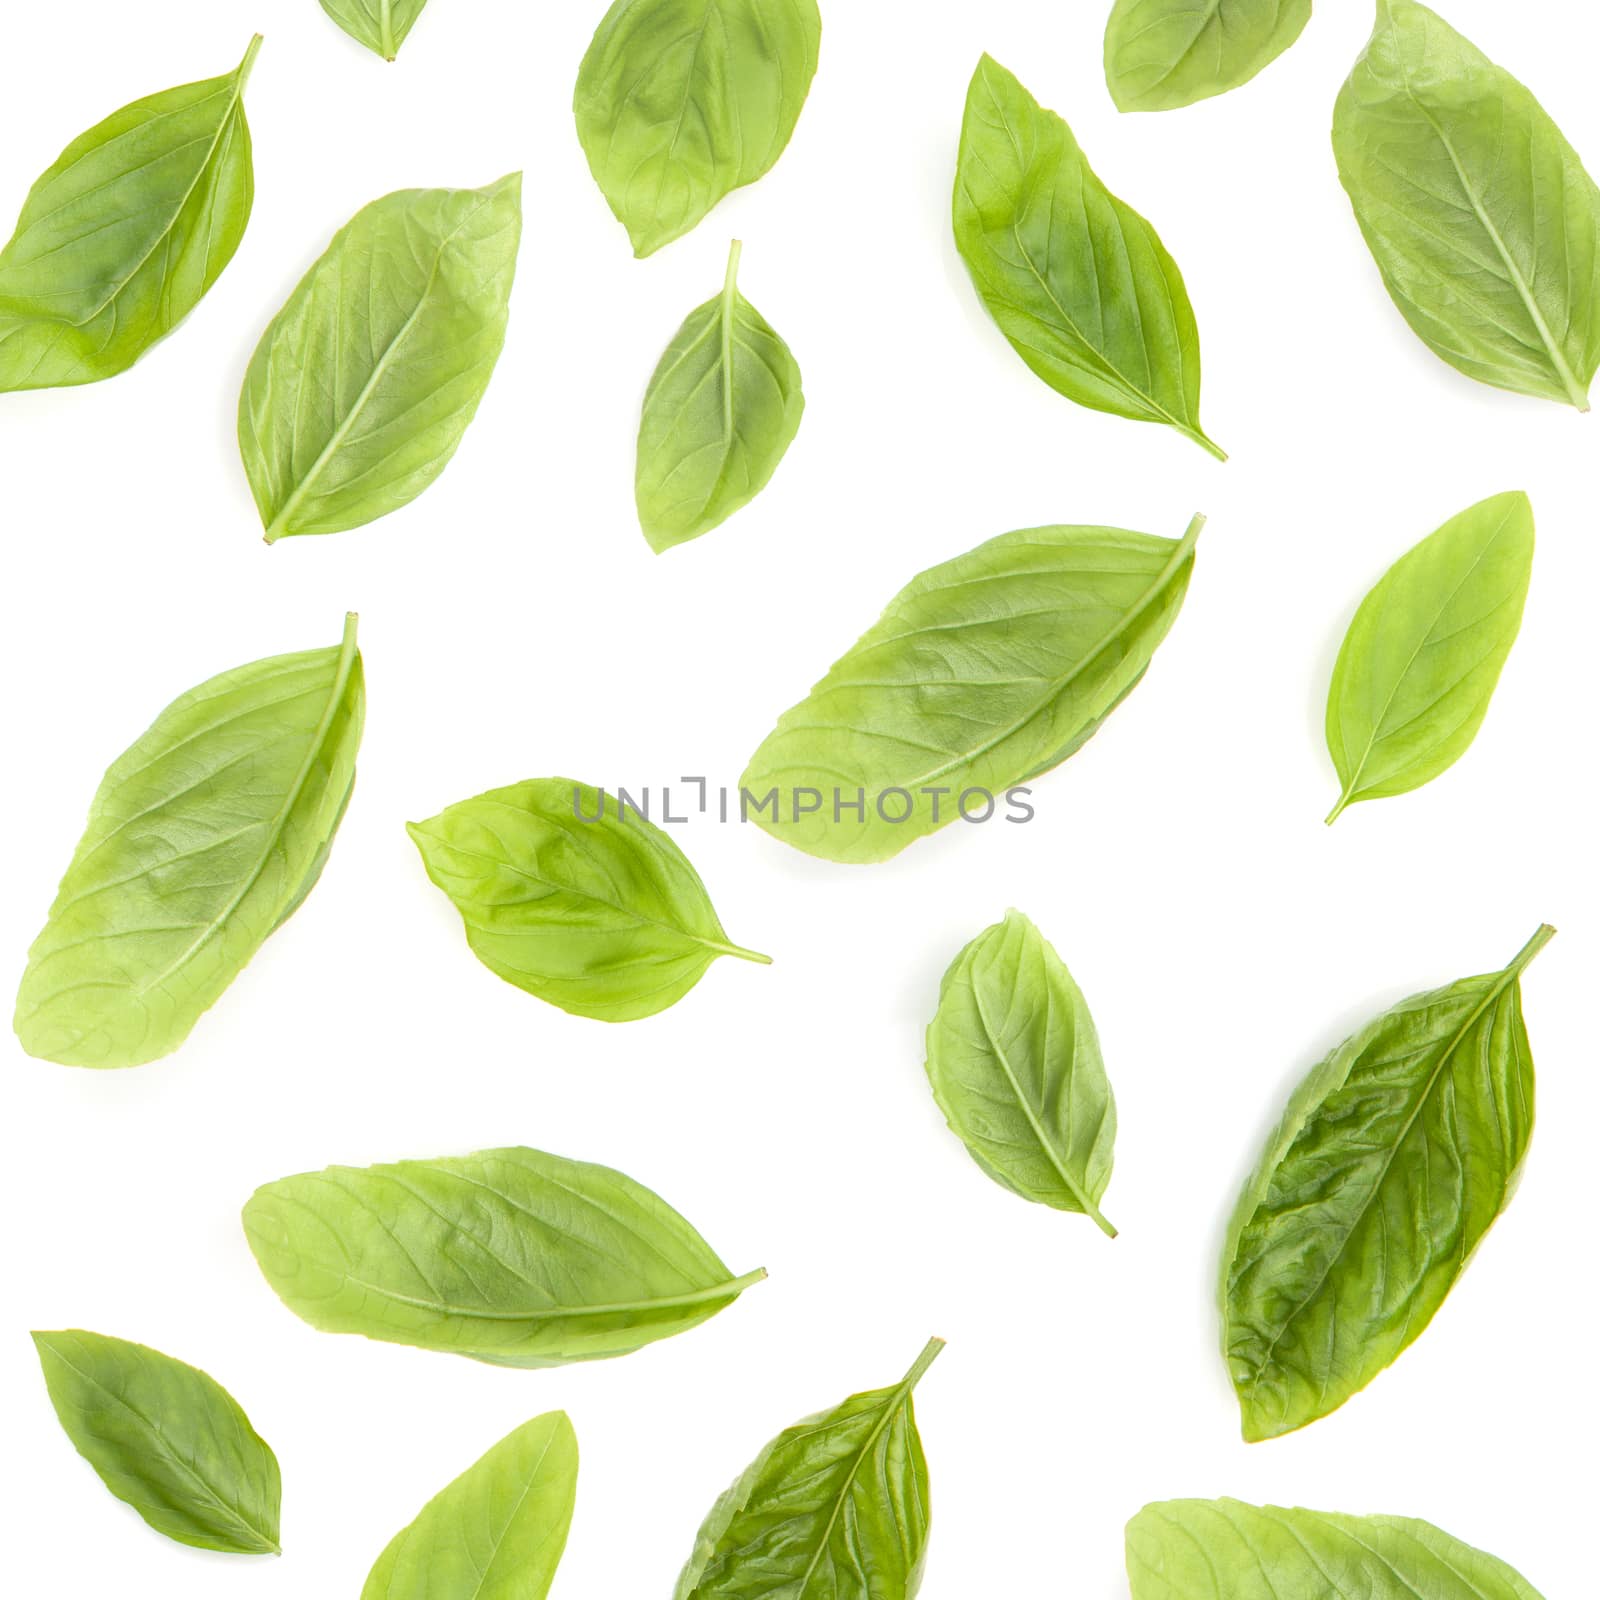 Fresh sweet basil leaves isolated on white background. Sweet bas by kerdkanno